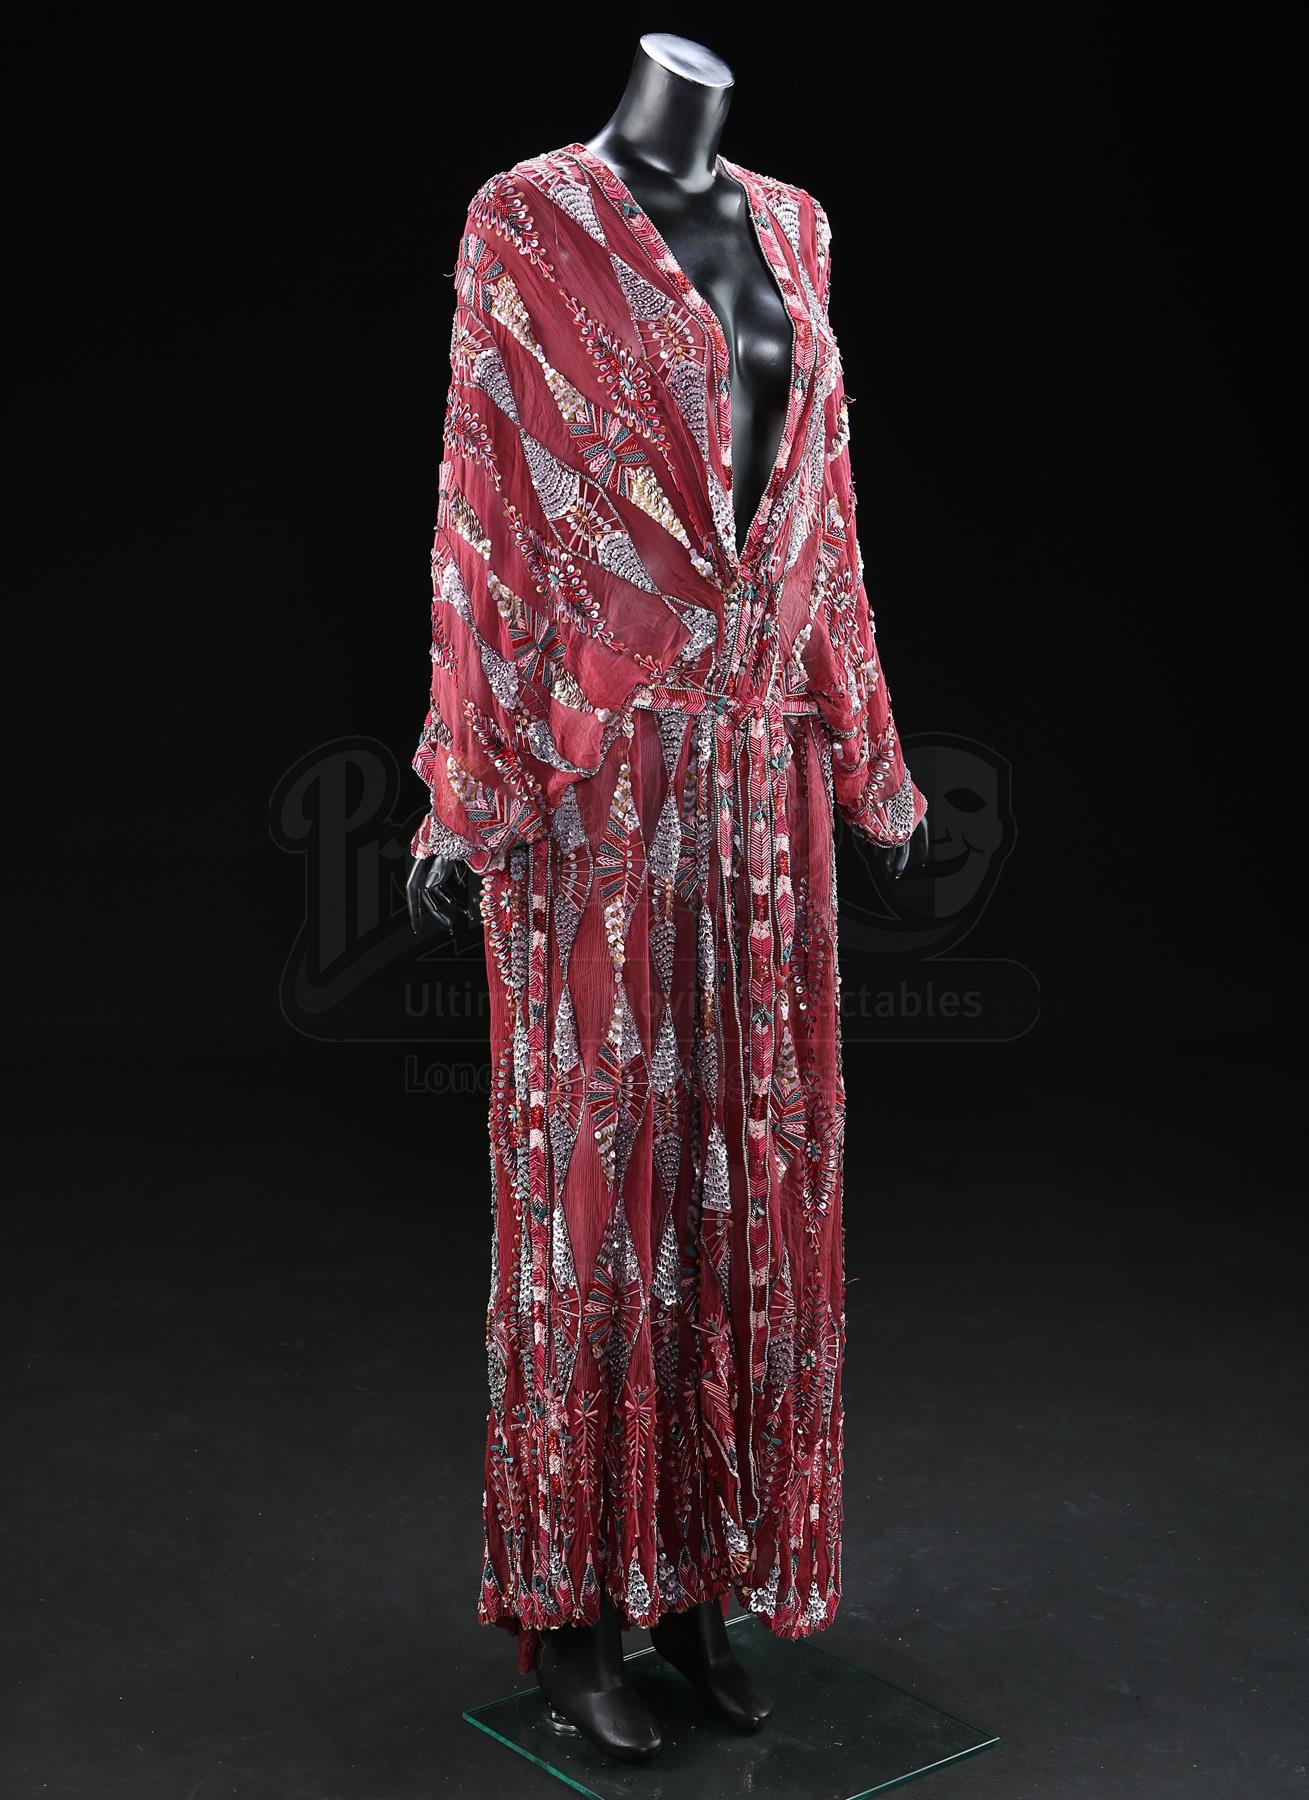 Hathor's Bedroom Robe - Current price: $300